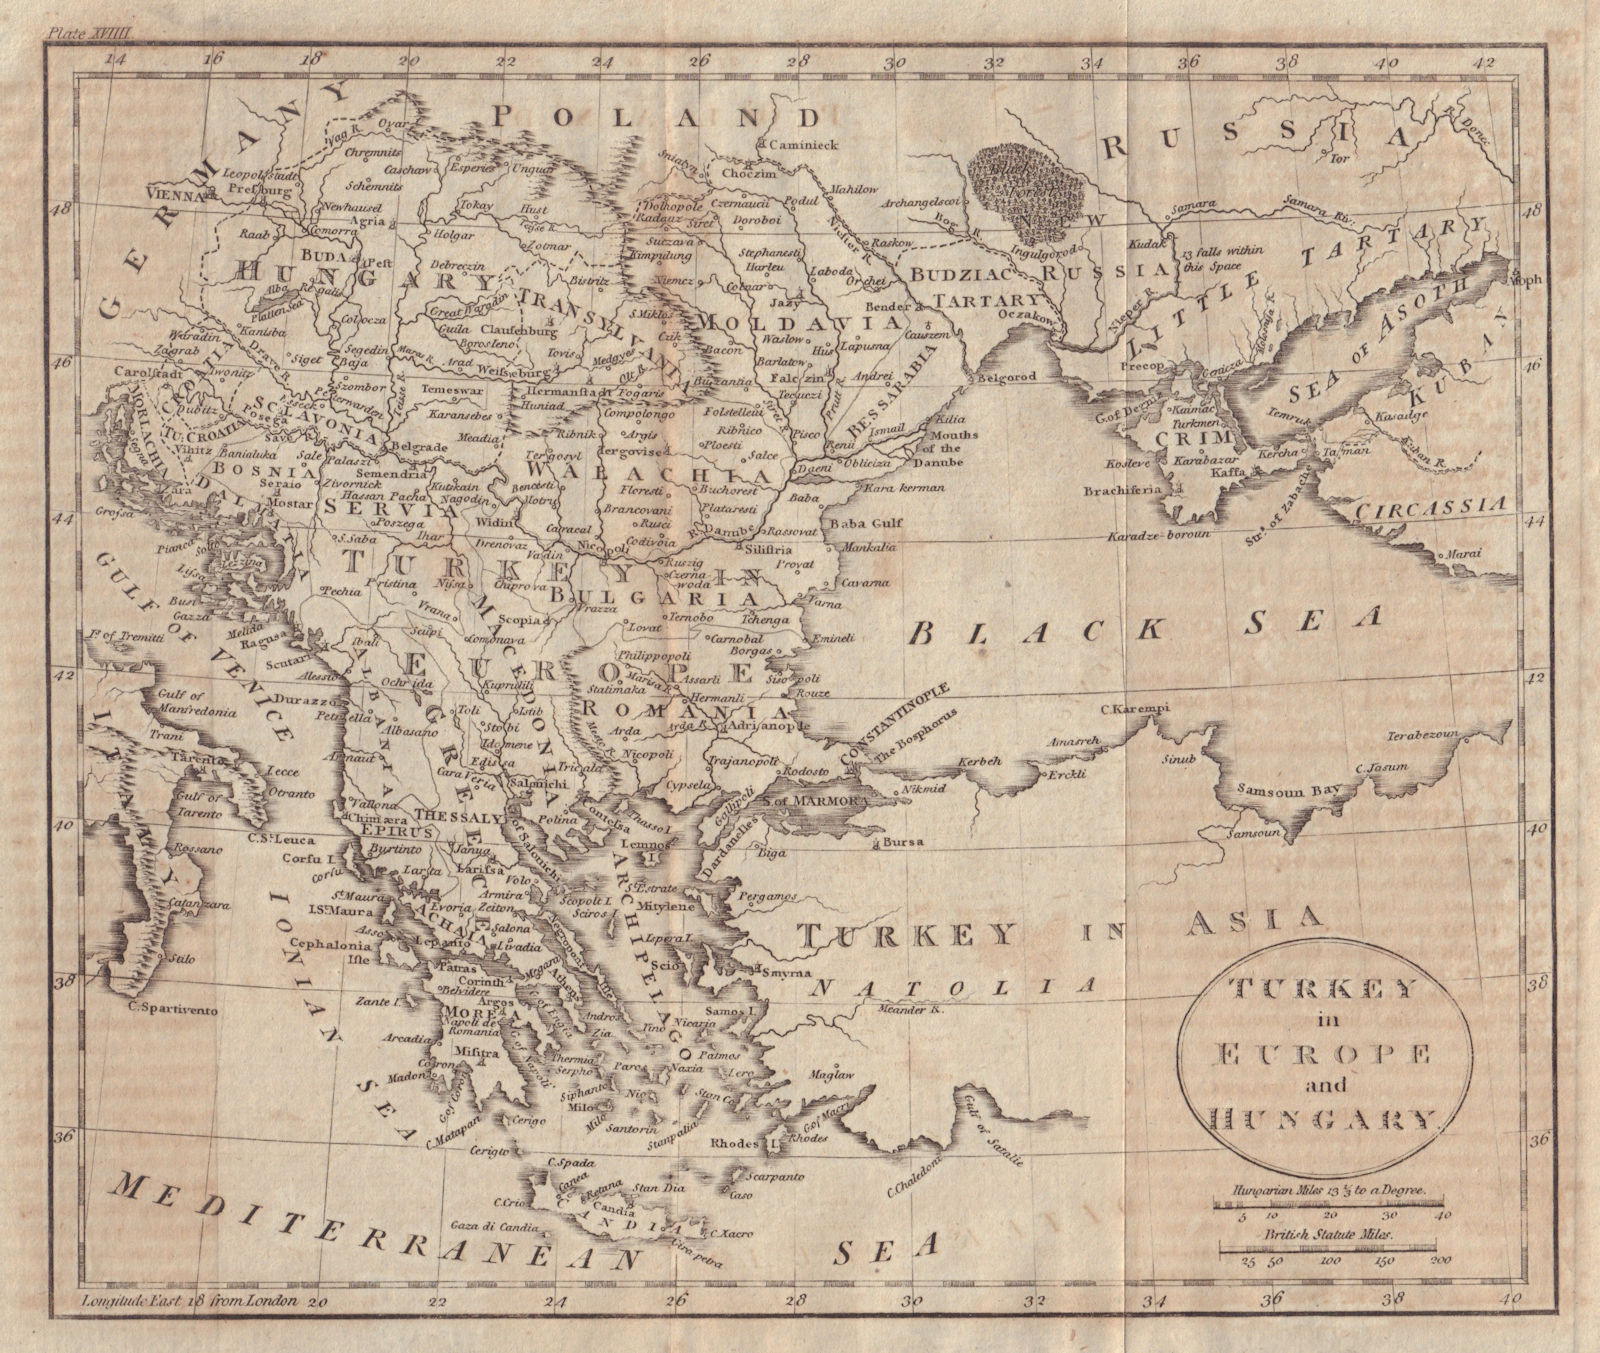 Associate Product Turkey in Europe and Hungary. Balkans Greece Ukraine. WALKER 1805 old map